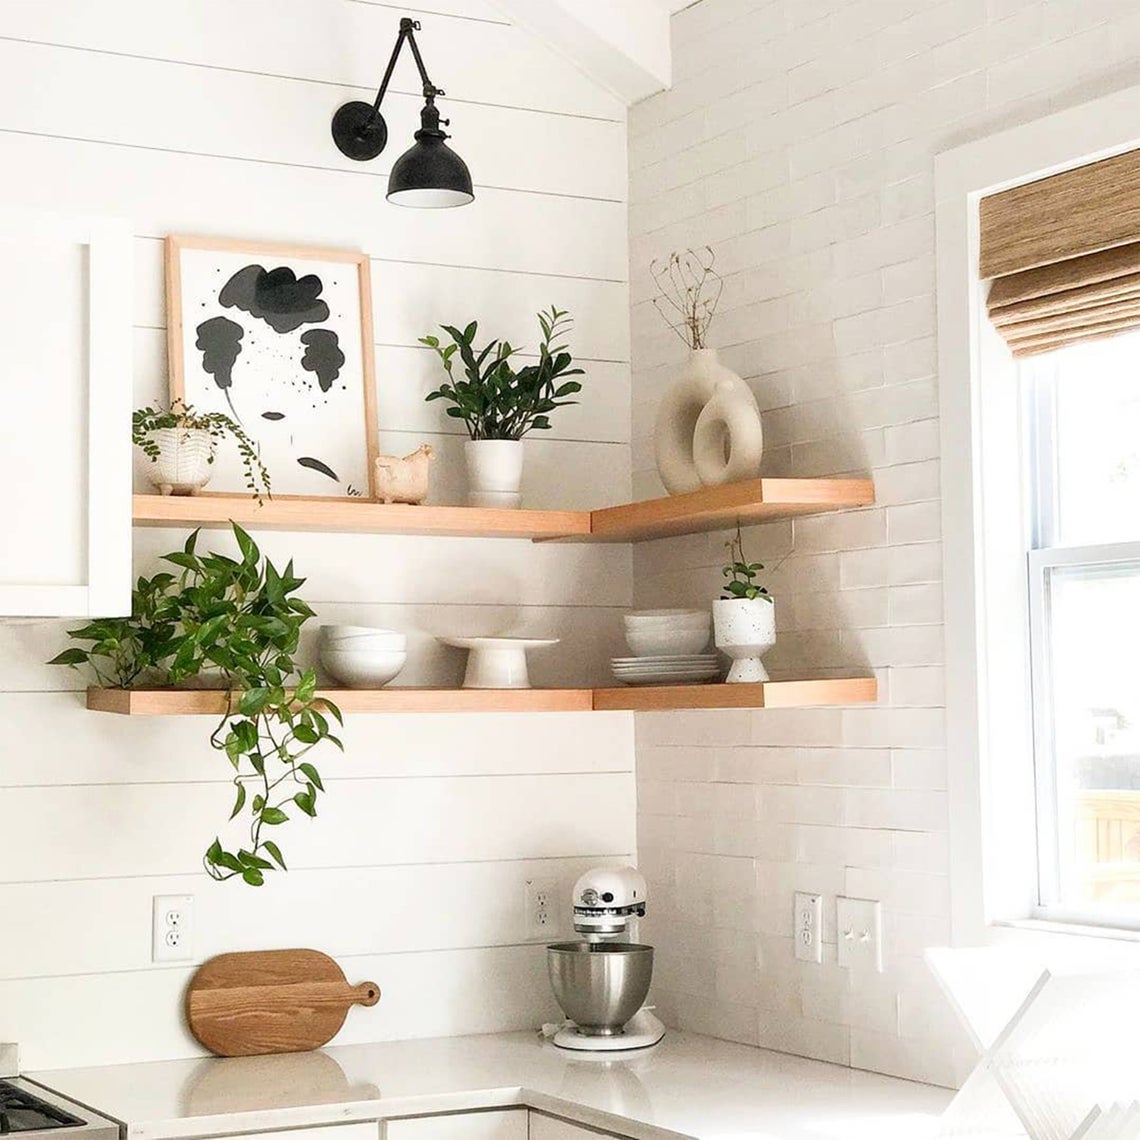 How To Style Pinterest-Worthy Floating Kitchen Shelves 2 corner shelves